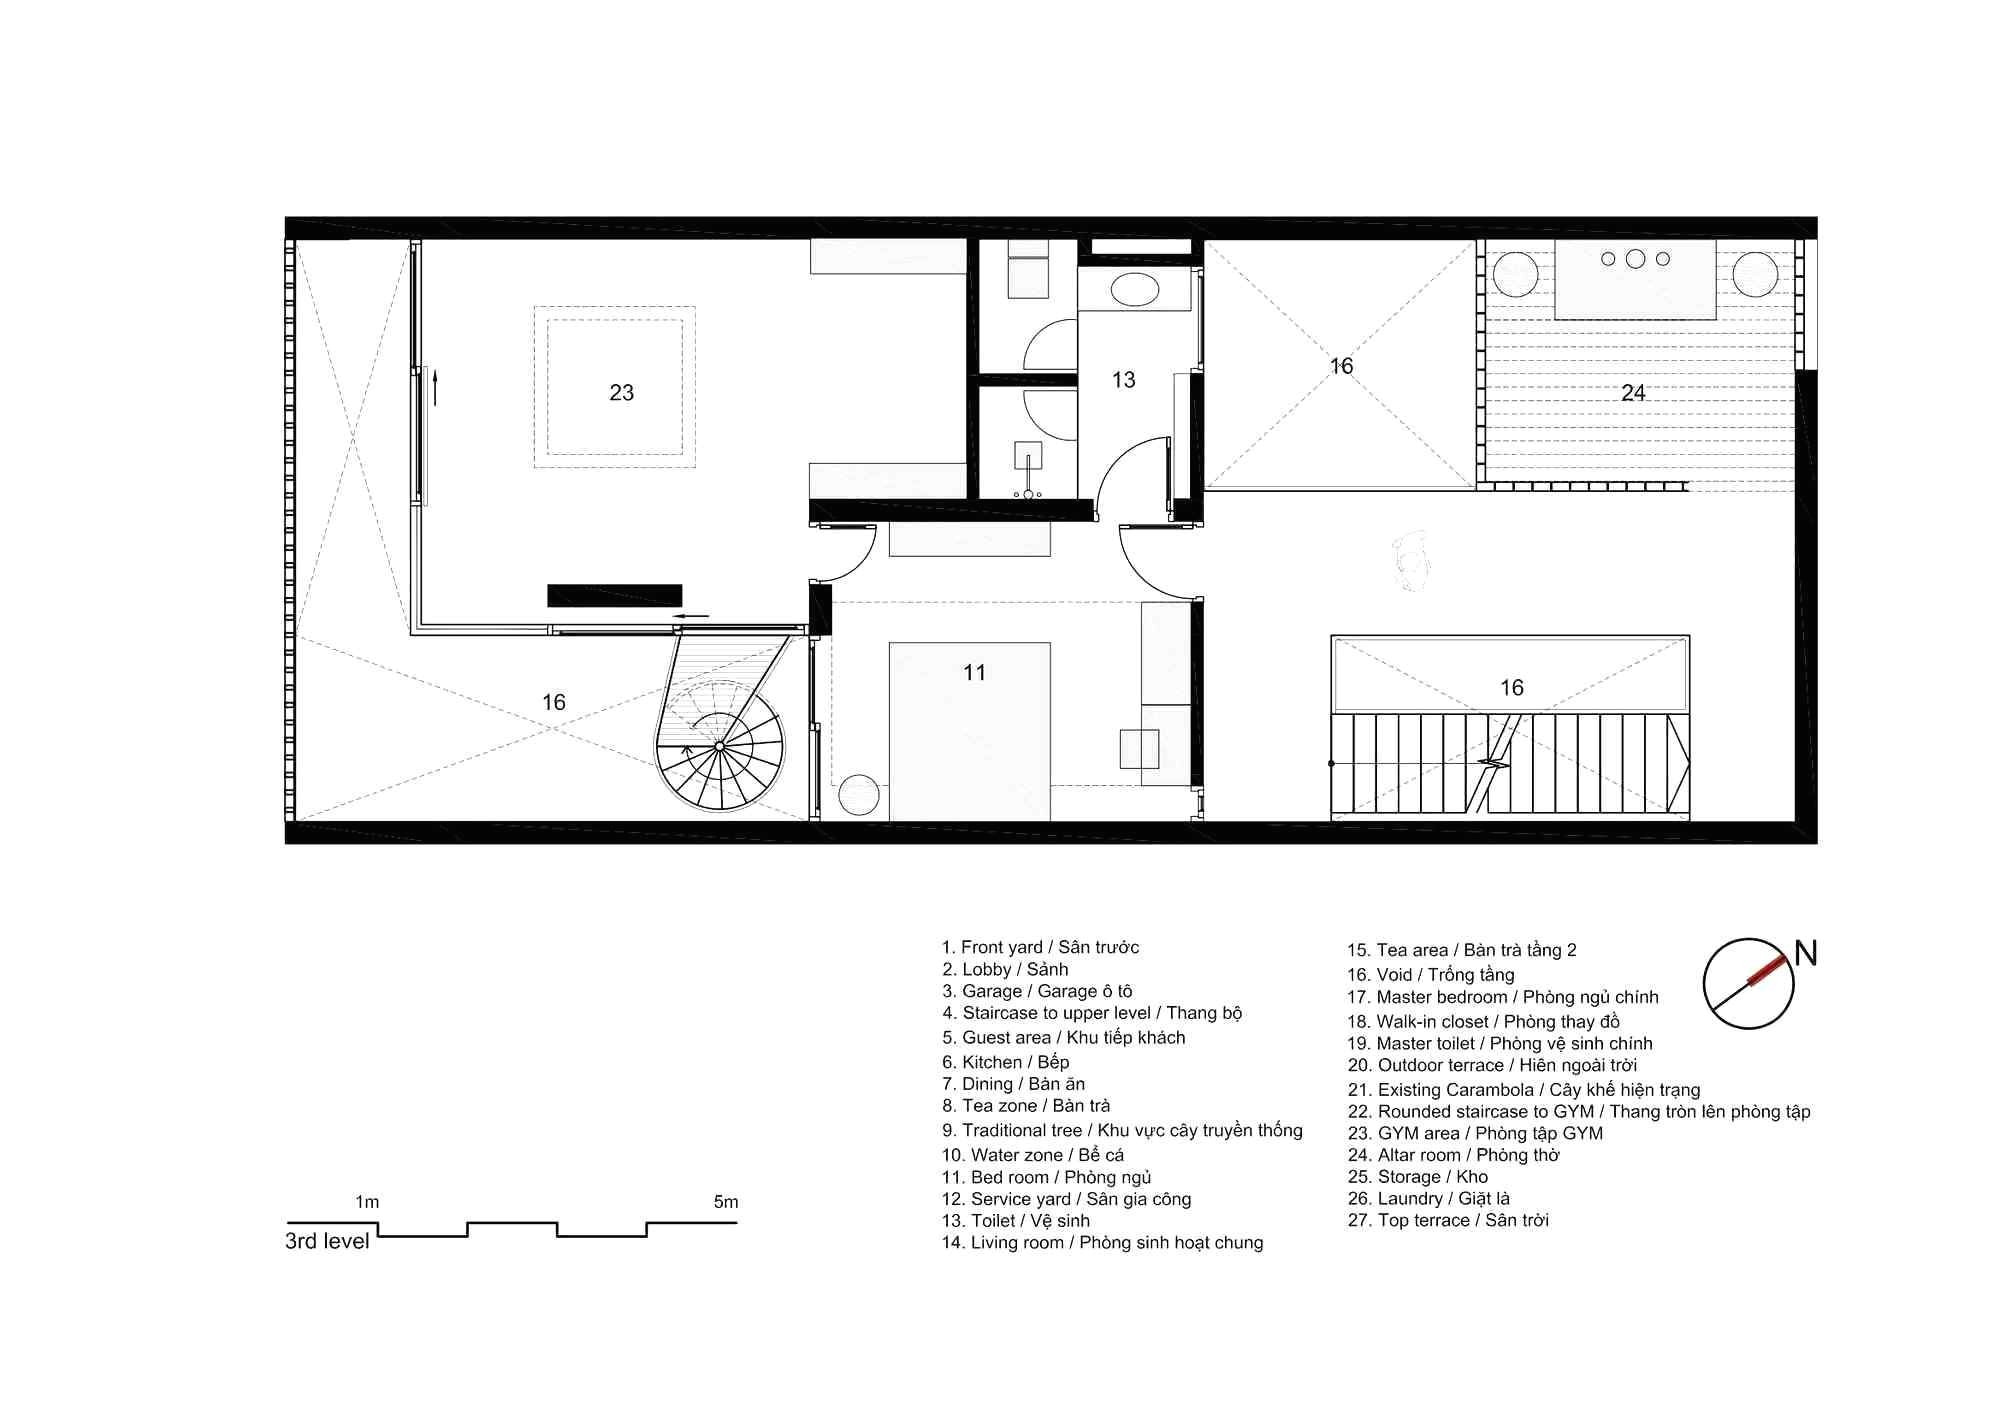 easy floor plan maker inspirational house floor plan designer luxury simple kitchen floor plans 0d